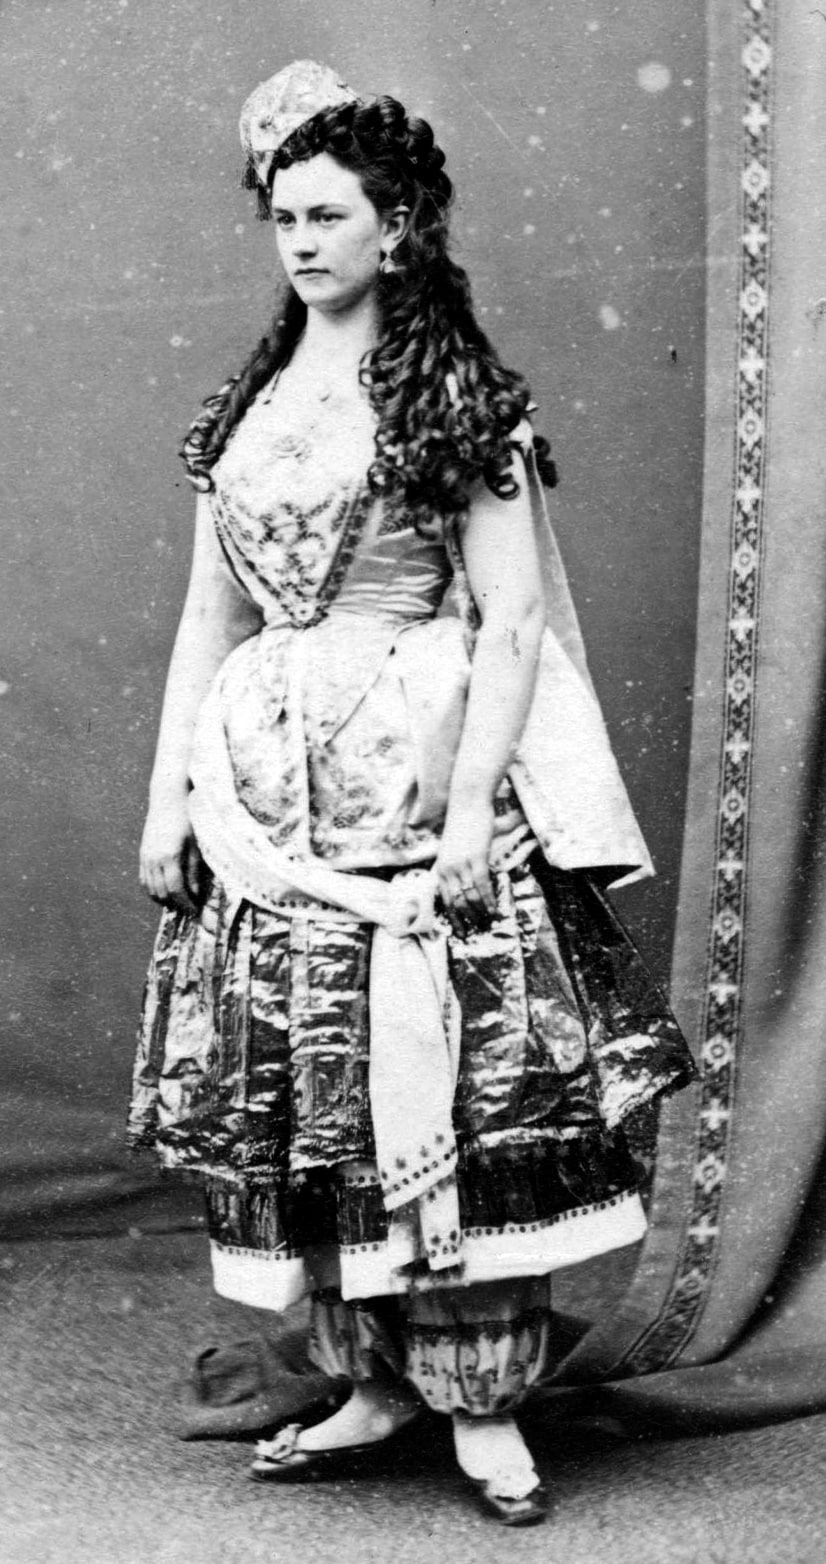 Fanny Wiseman, c. 1860s